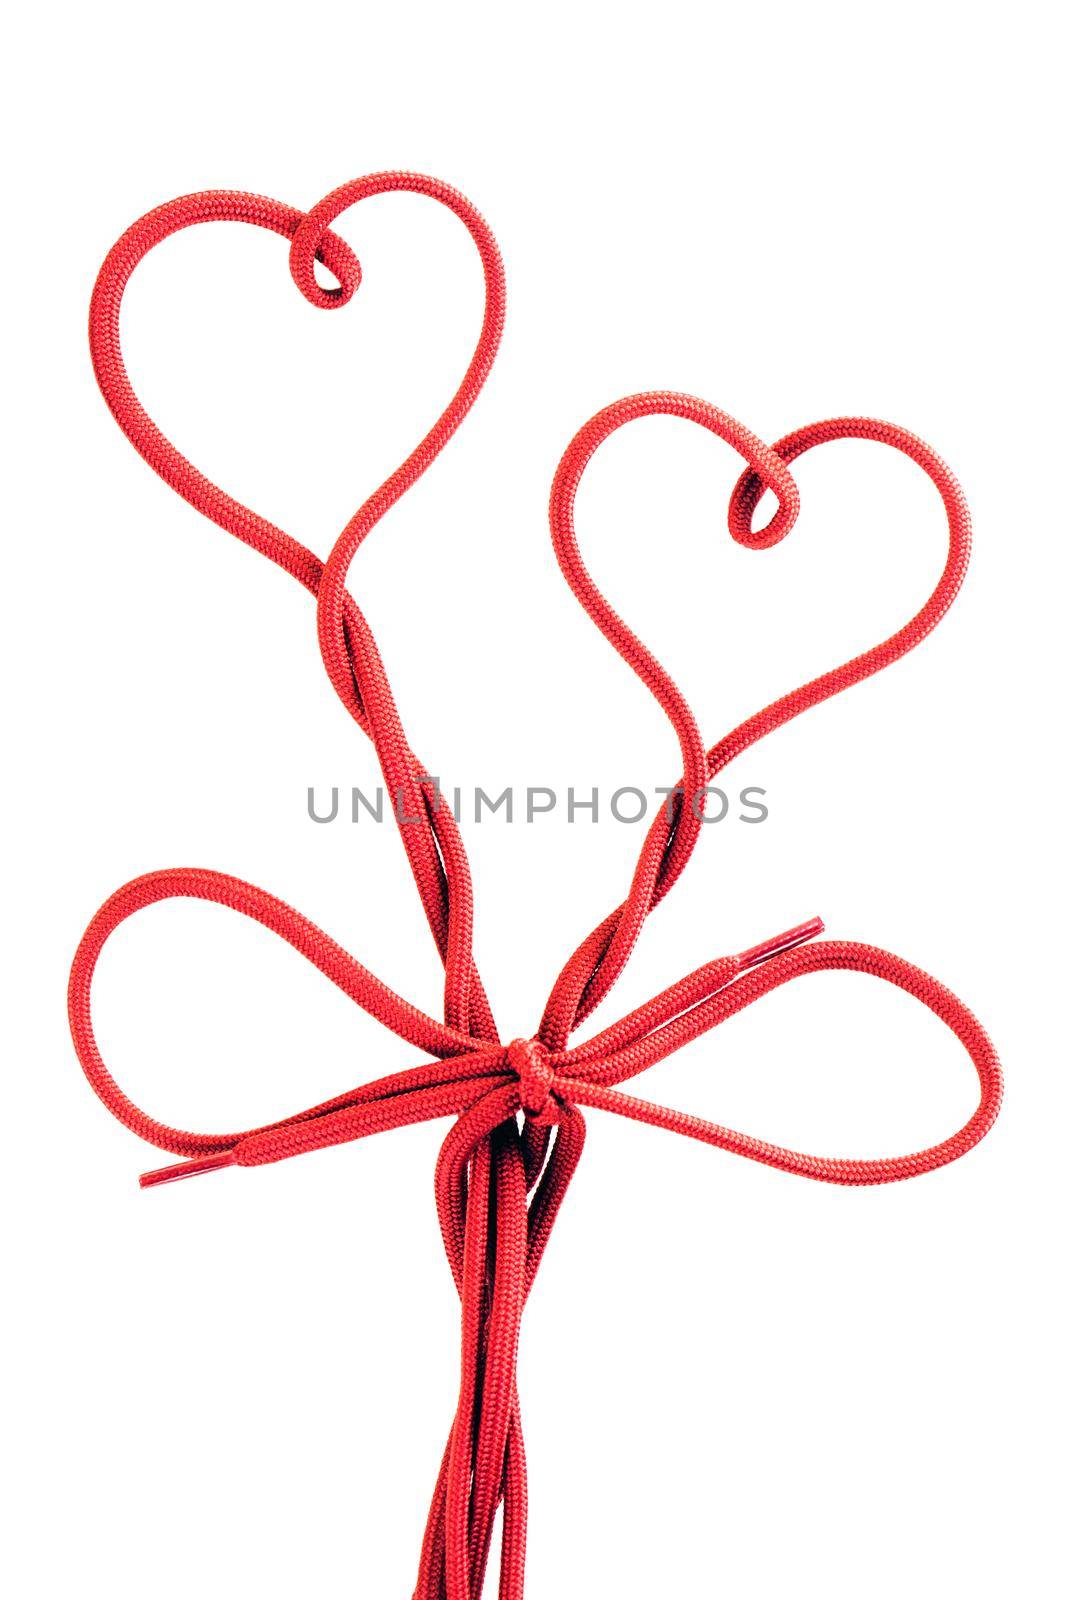 heart shaped shoe laces by kokimk